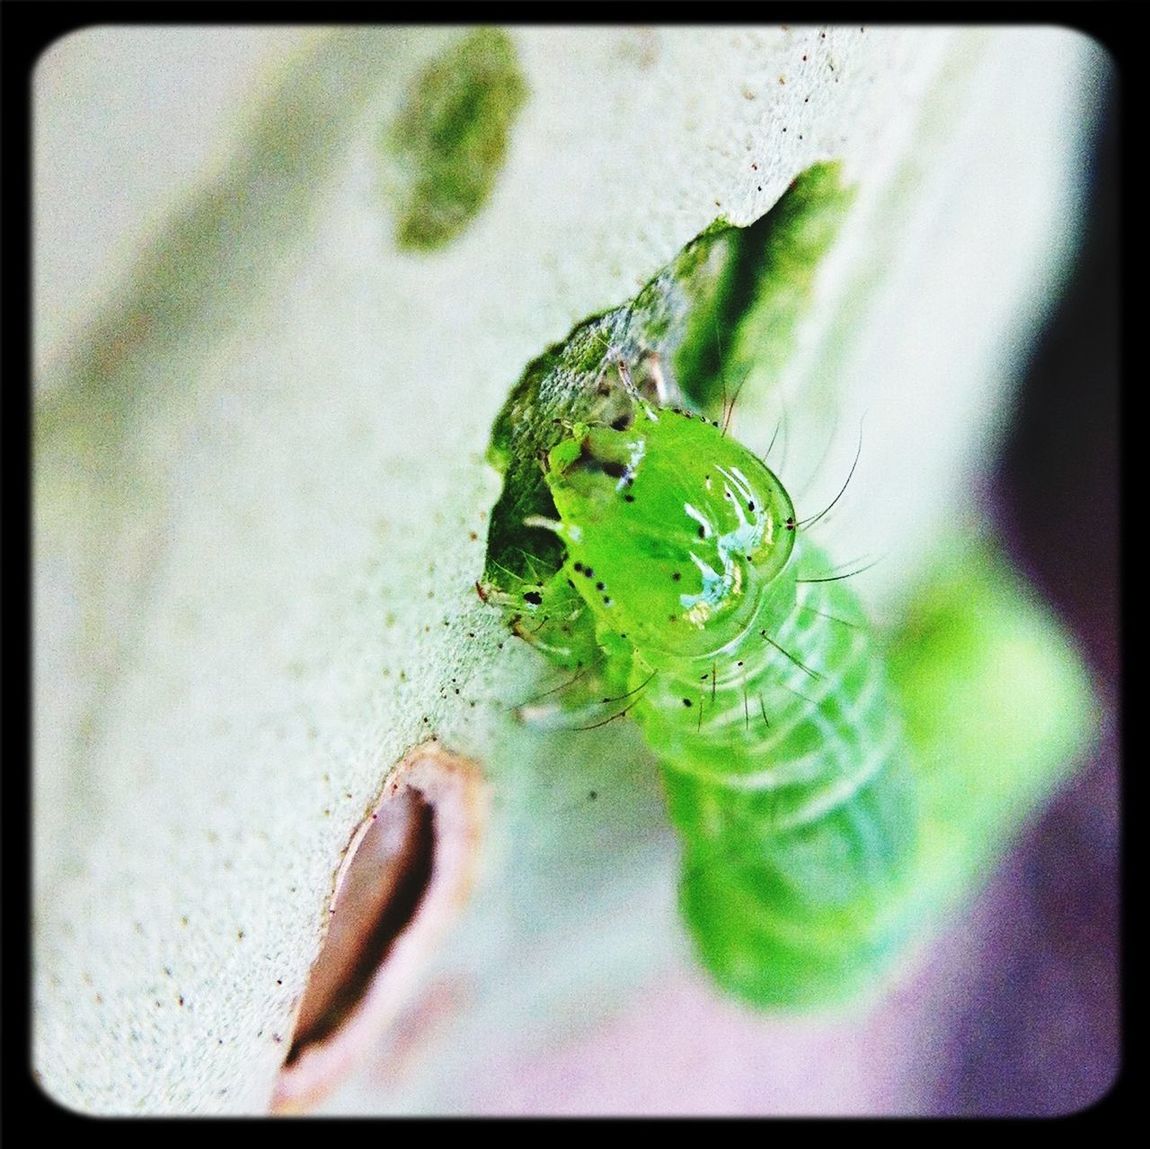 Caterpillar eating leaf